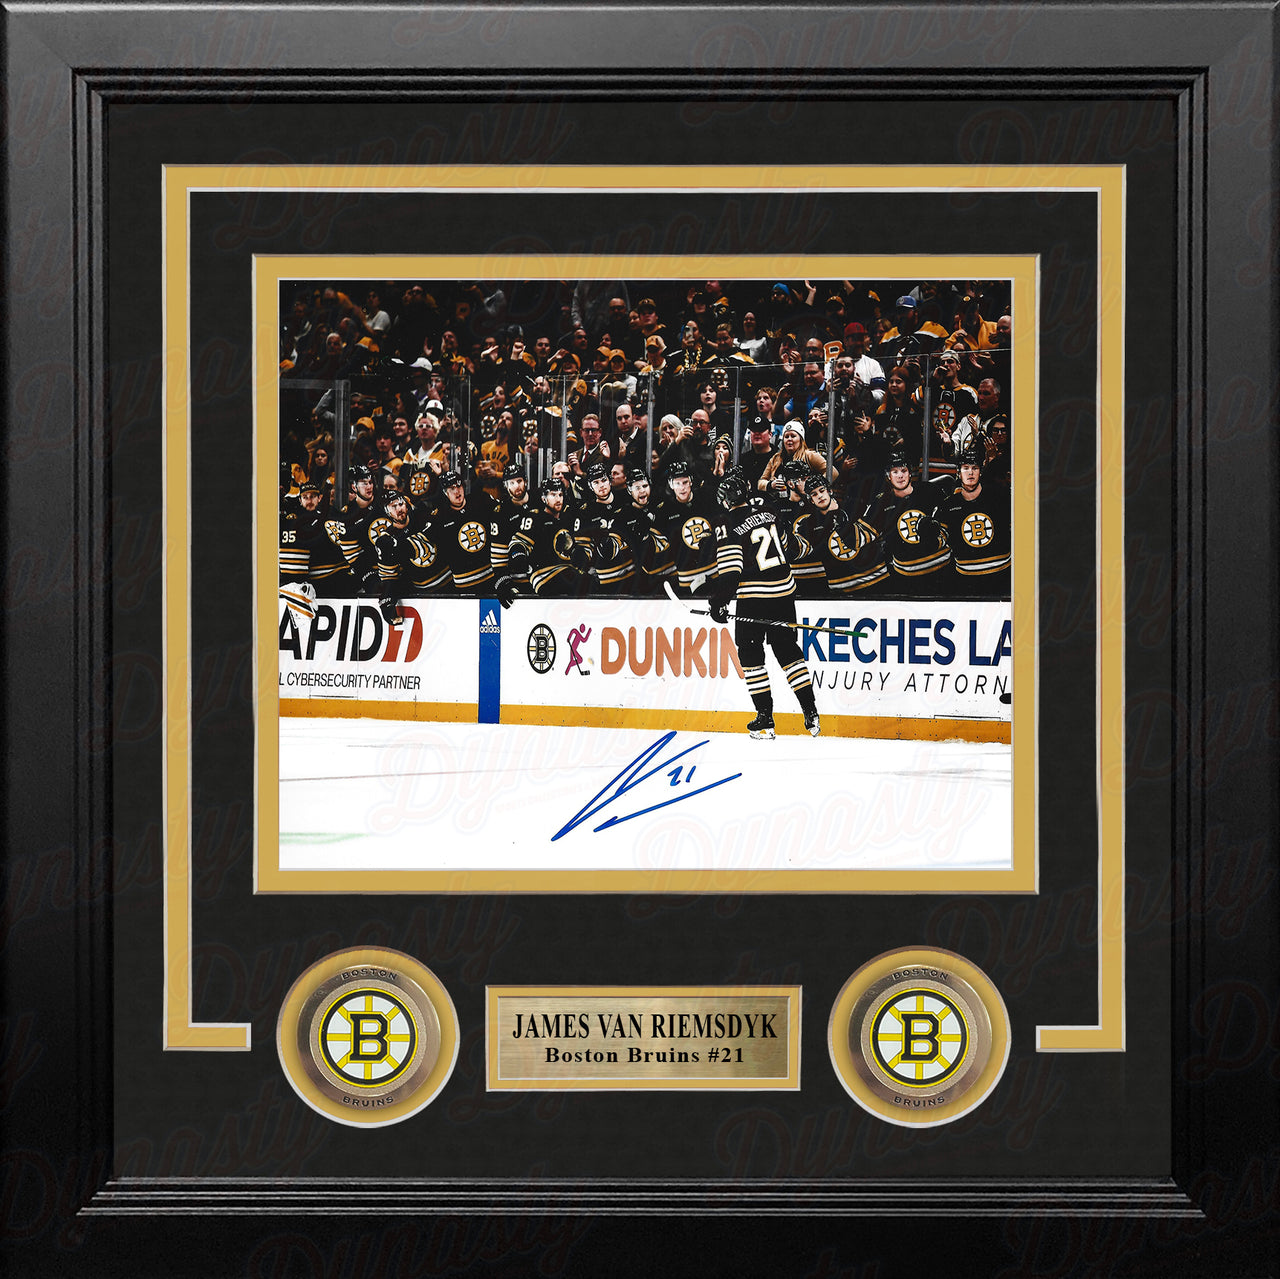 James Van Riemsdyk Goal Celebration Autographed Boston Bruins 8" x 10" Framed Hockey Photo